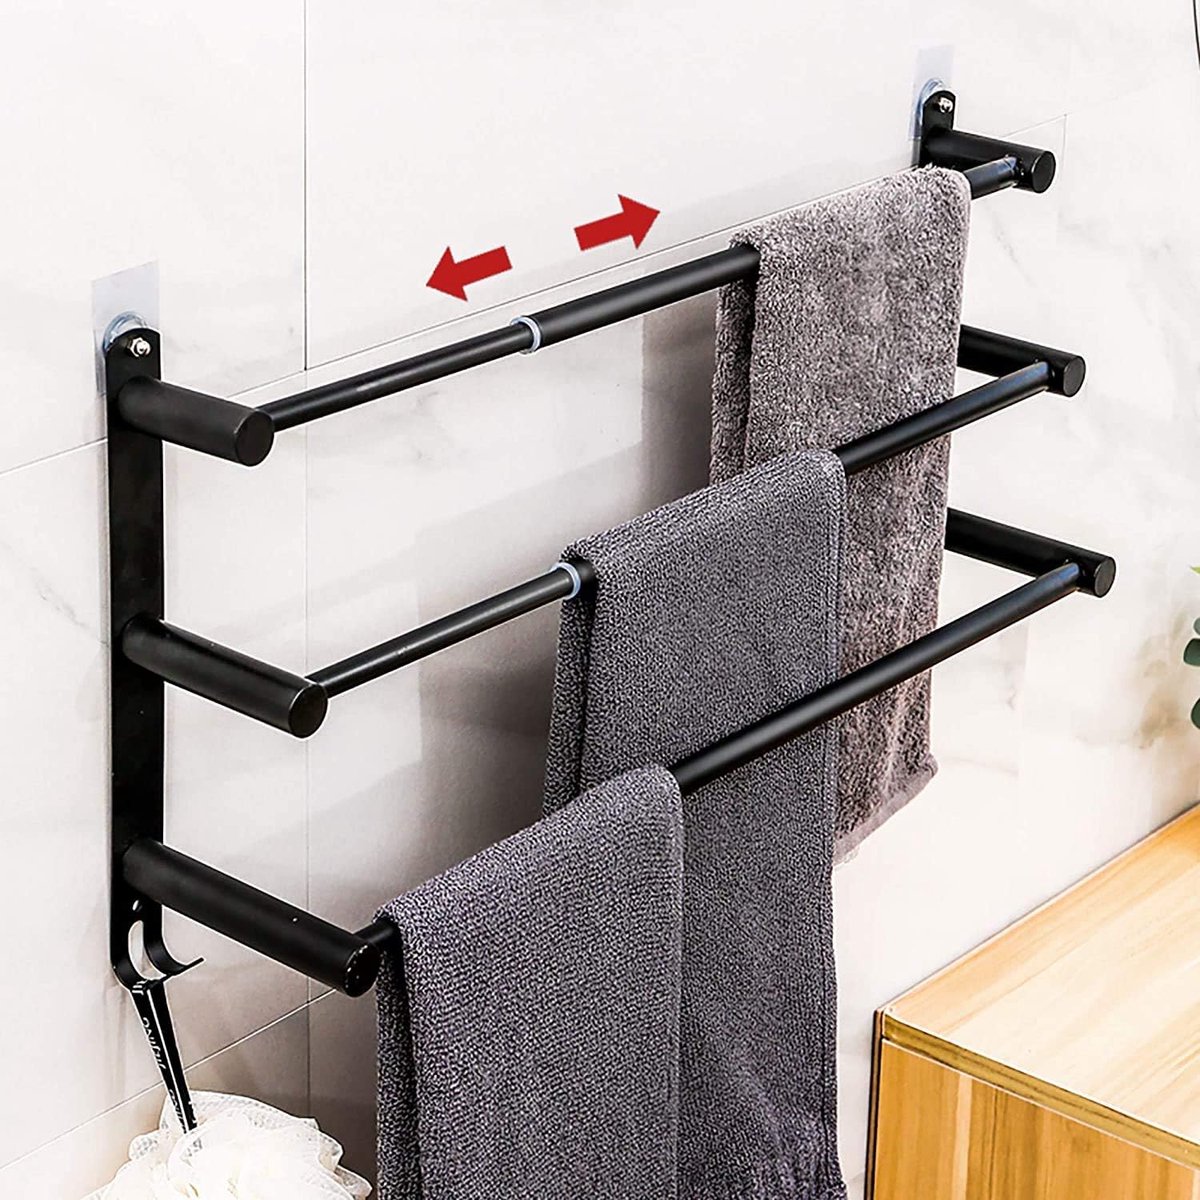 Towel Rail Extendible 43-78 cm Stainless Steel No Drilling Towel Rail Wall Shelf Suitable for Bathroom Kitchen Bath Towel Holder (Black 3-Layer)